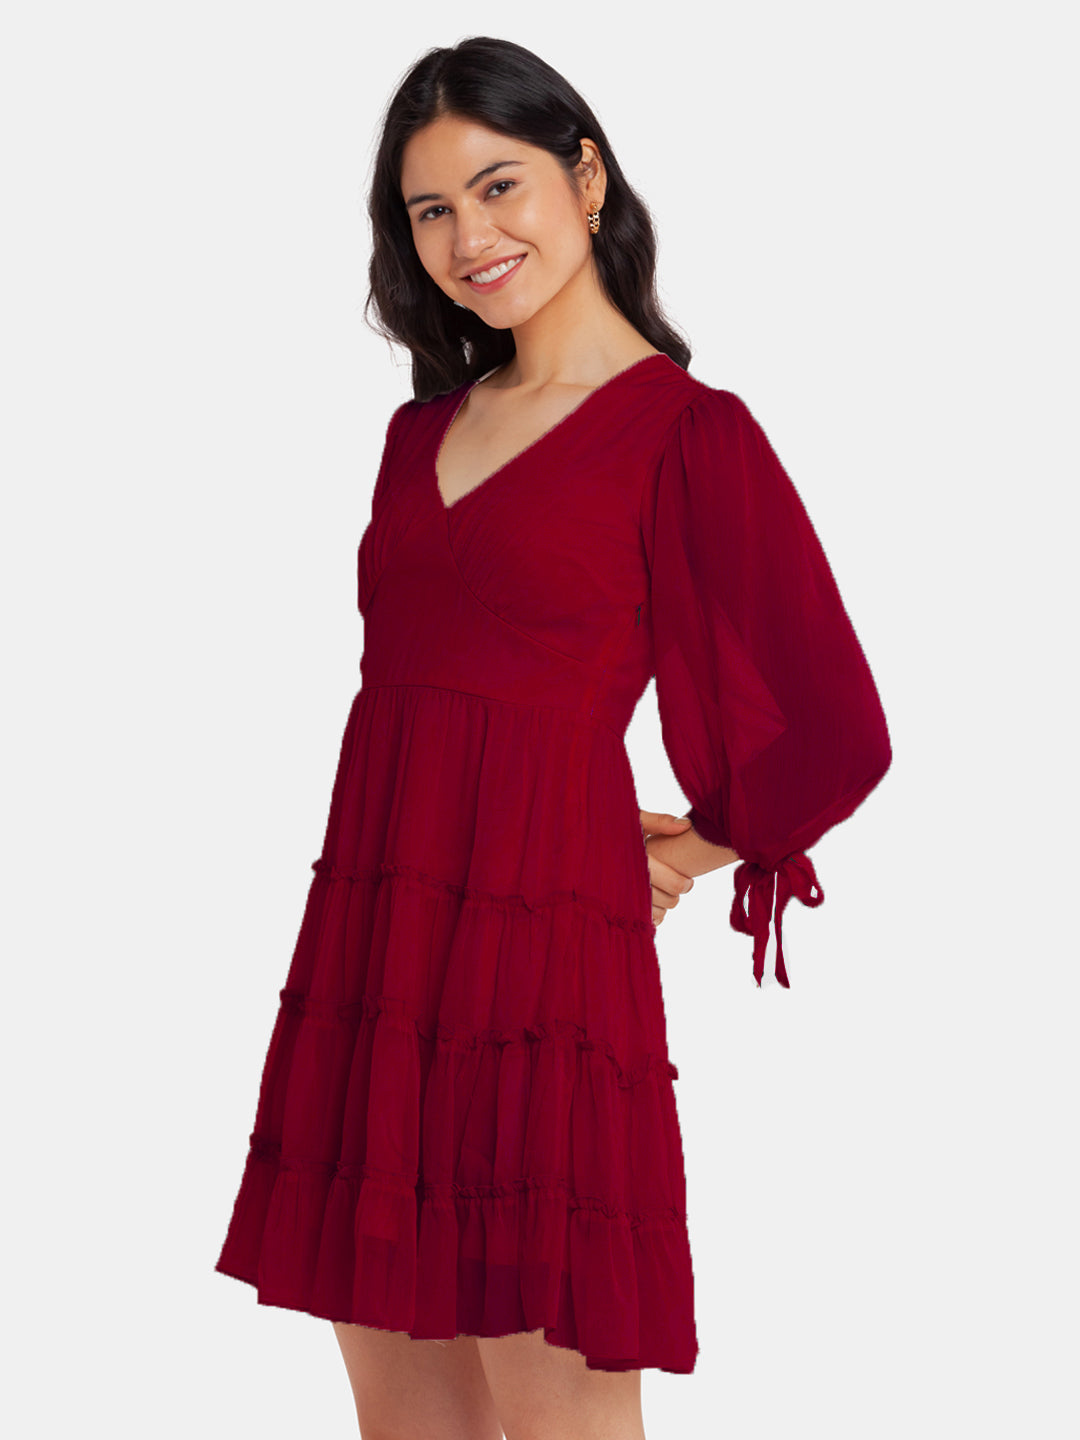 Crimson-Red-Solid-Fit-and-Flare-Short-Dress-VD02165_227-CrimsonRed-3